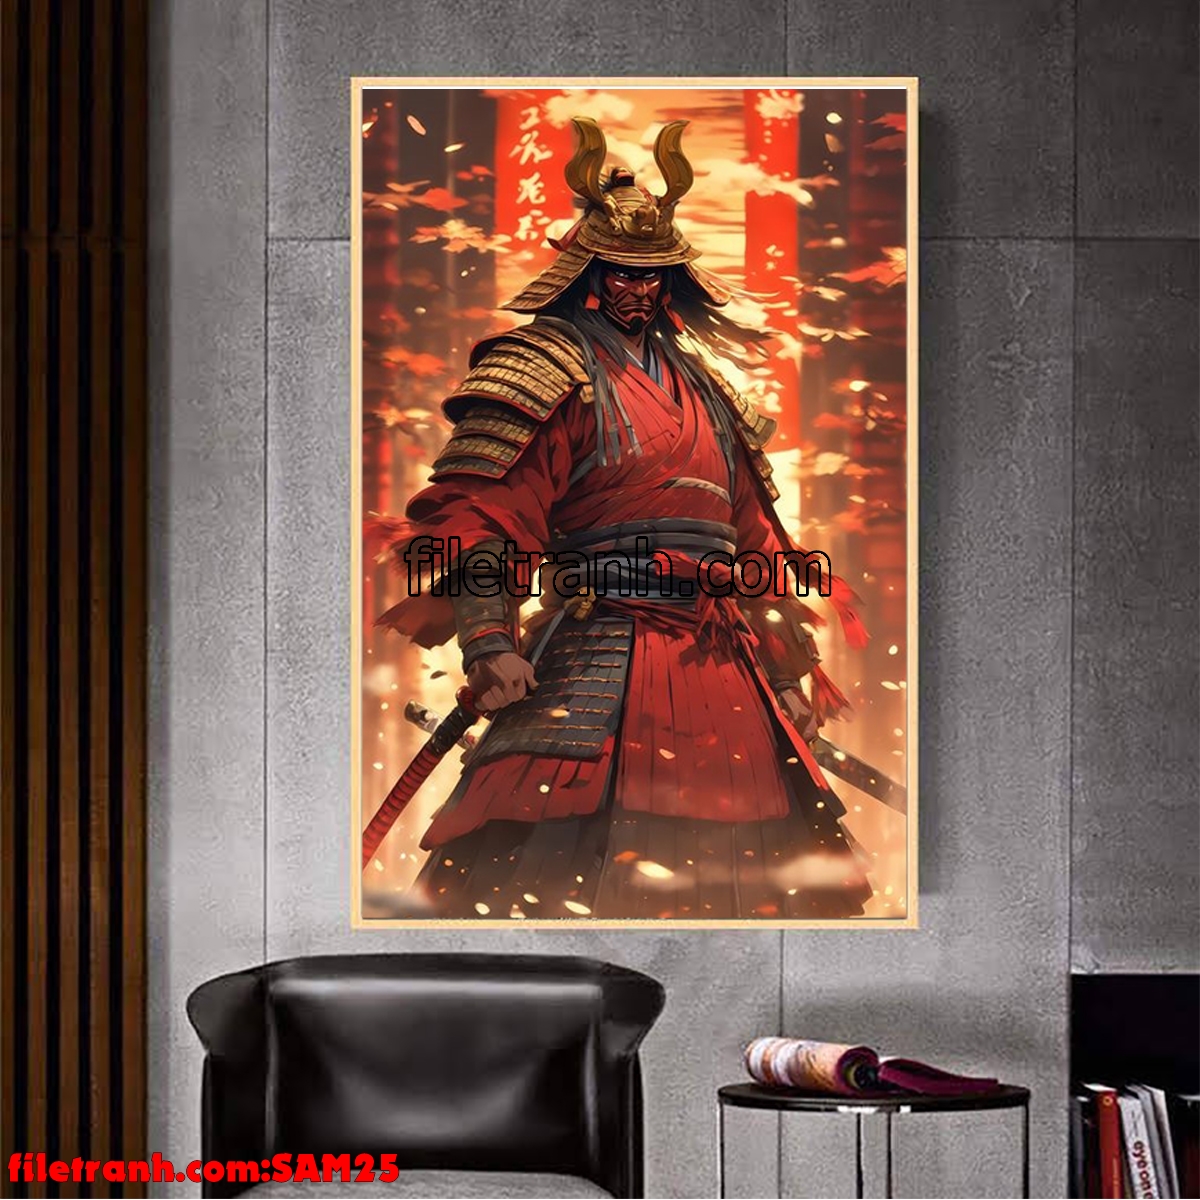 https://filetranh.com/tuong-nen/file-tranh-samurai-vo-si-nhat-ban-sam25.html